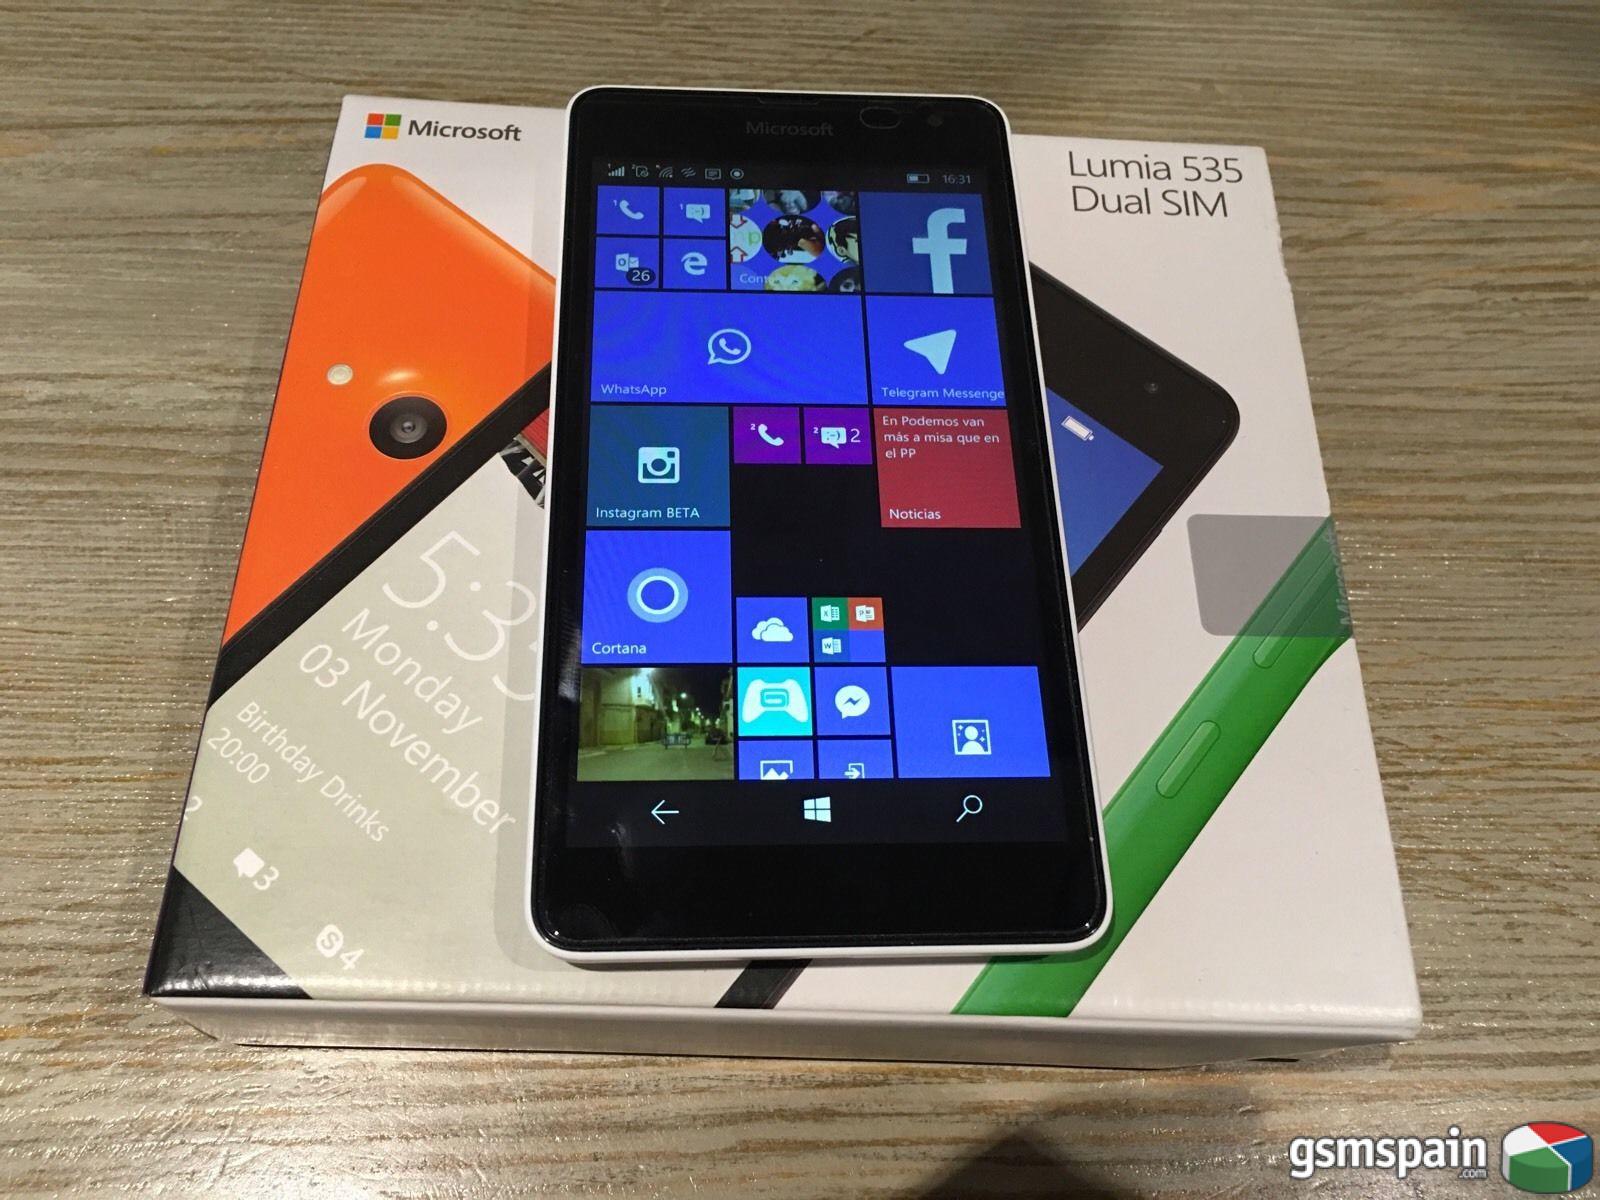 [VENDO] Lumia 535 Blanco. 8GB Dual Sim, W10. Sin uso. Cristal templado.